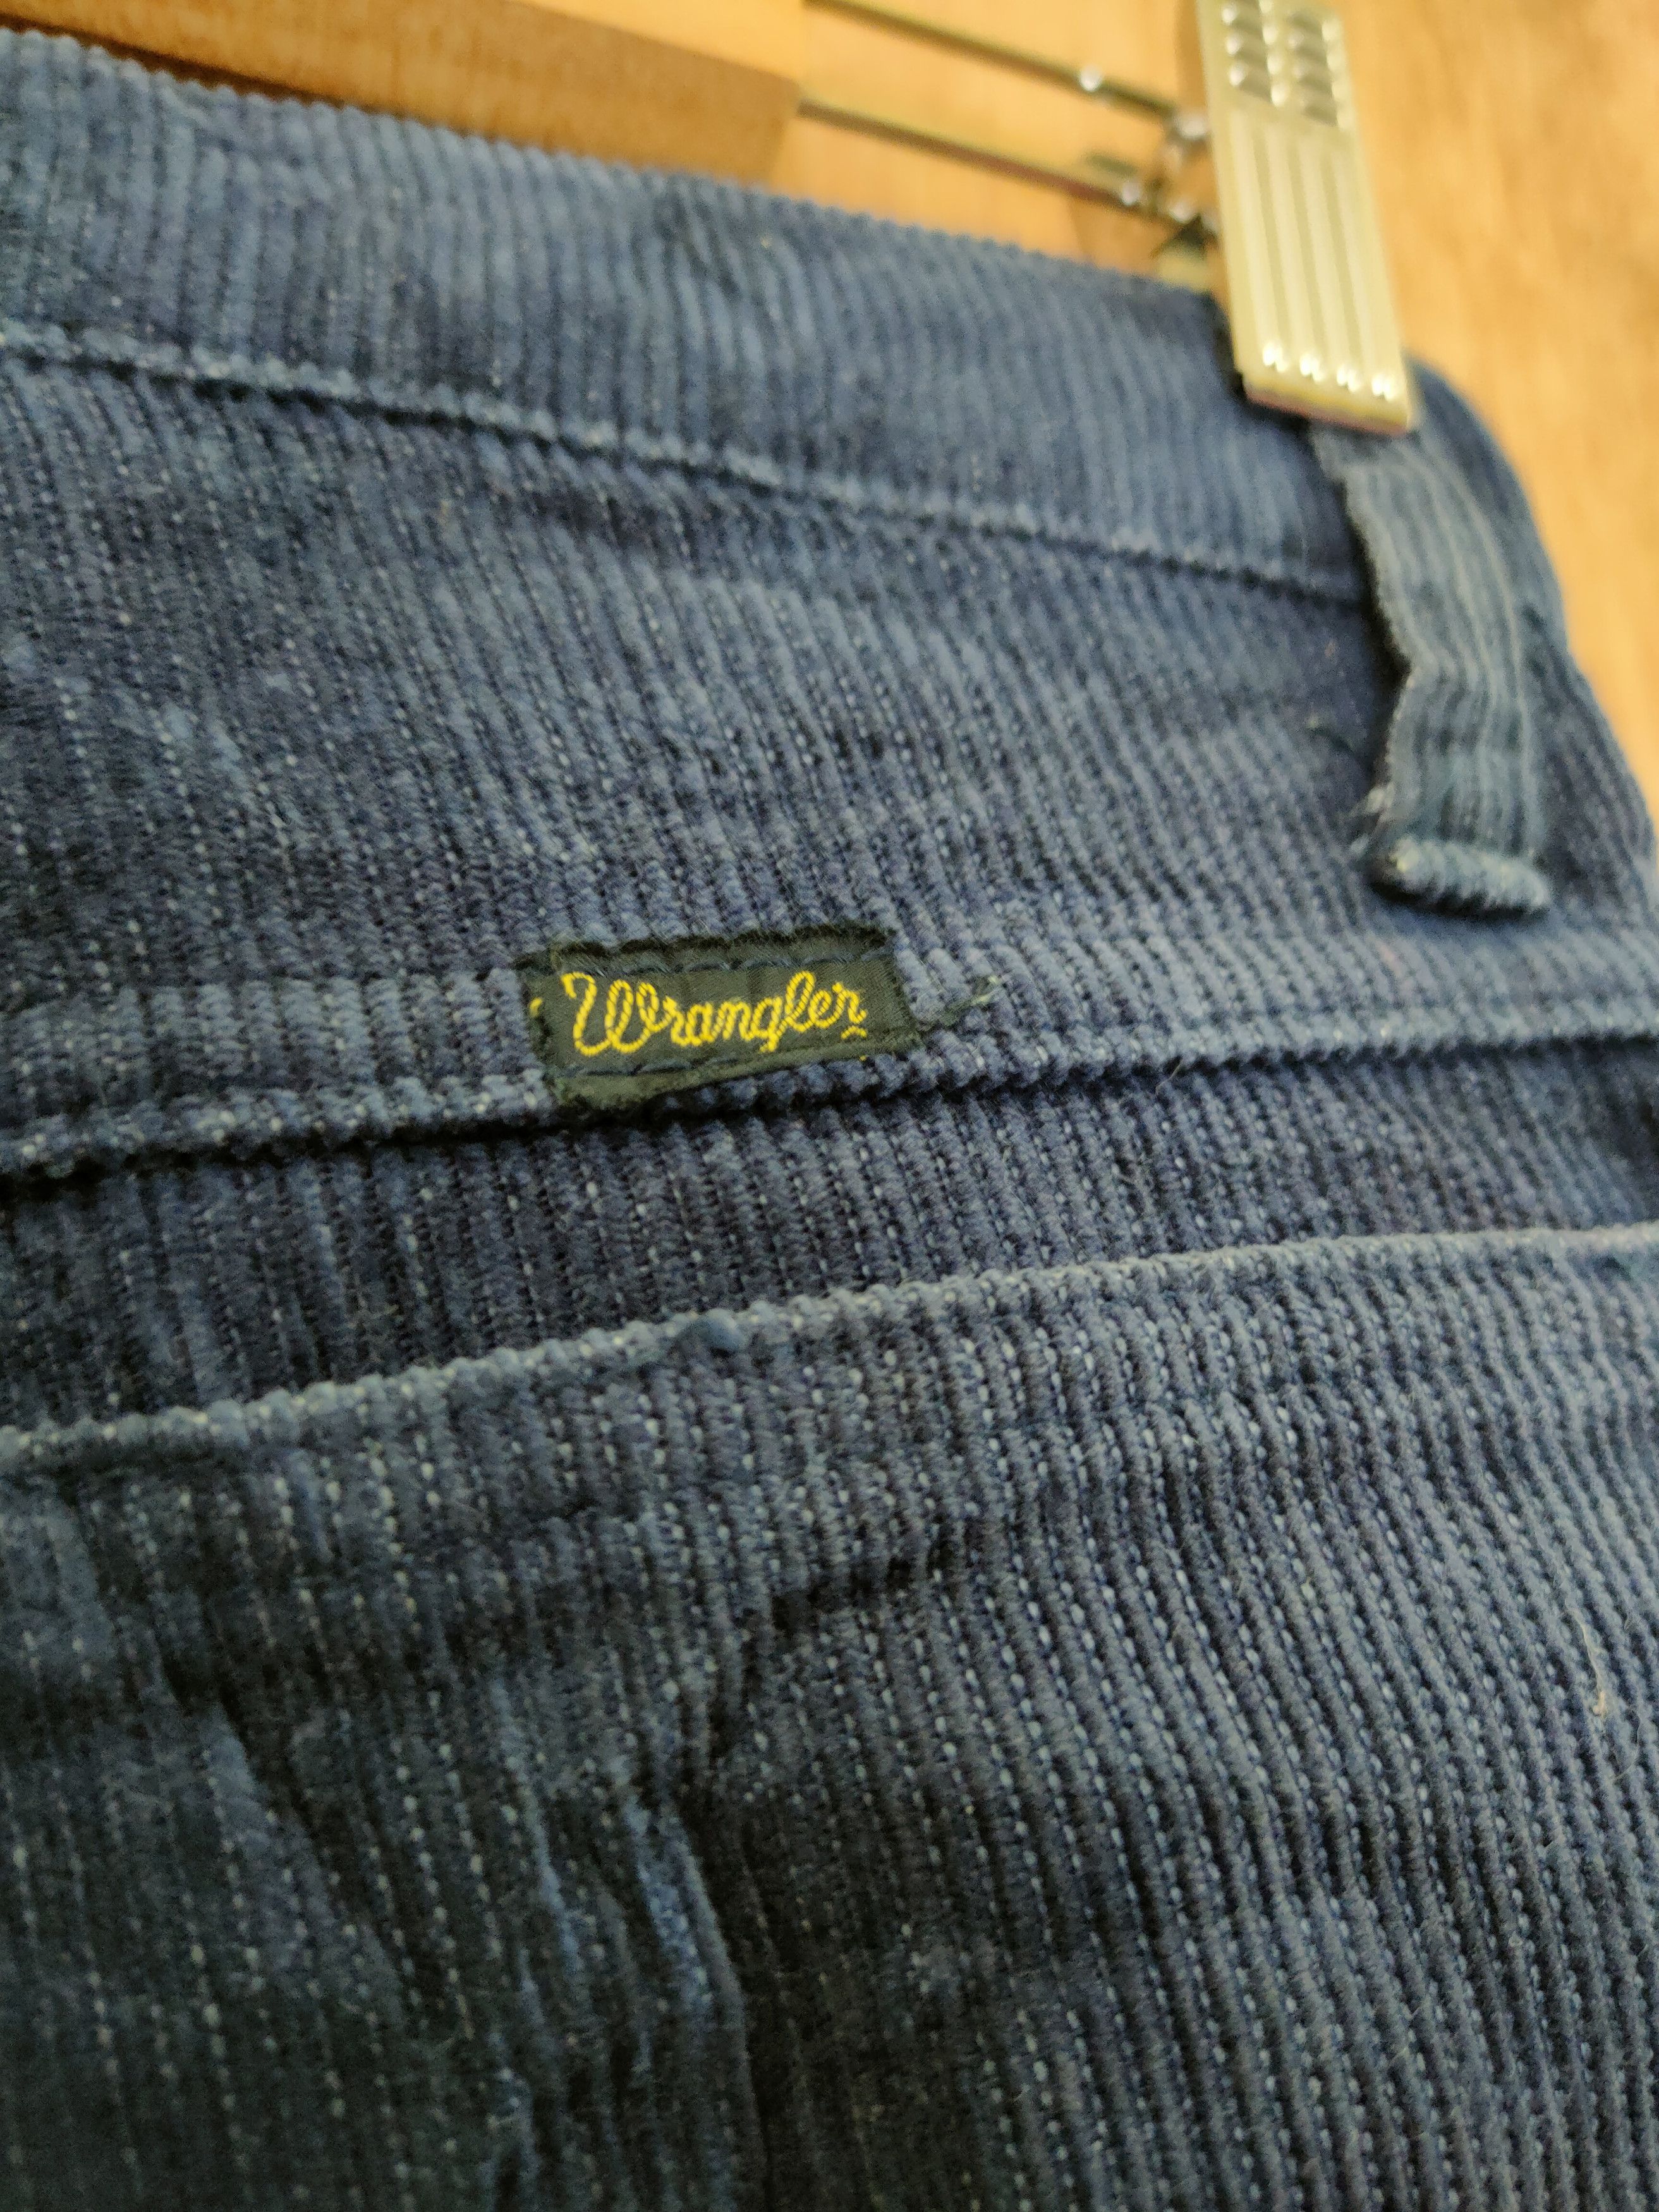 Vintage 90s wrangler vintage corduroy streetwear pants #46-413 Size US 28 / EU 44 - 9 Thumbnail